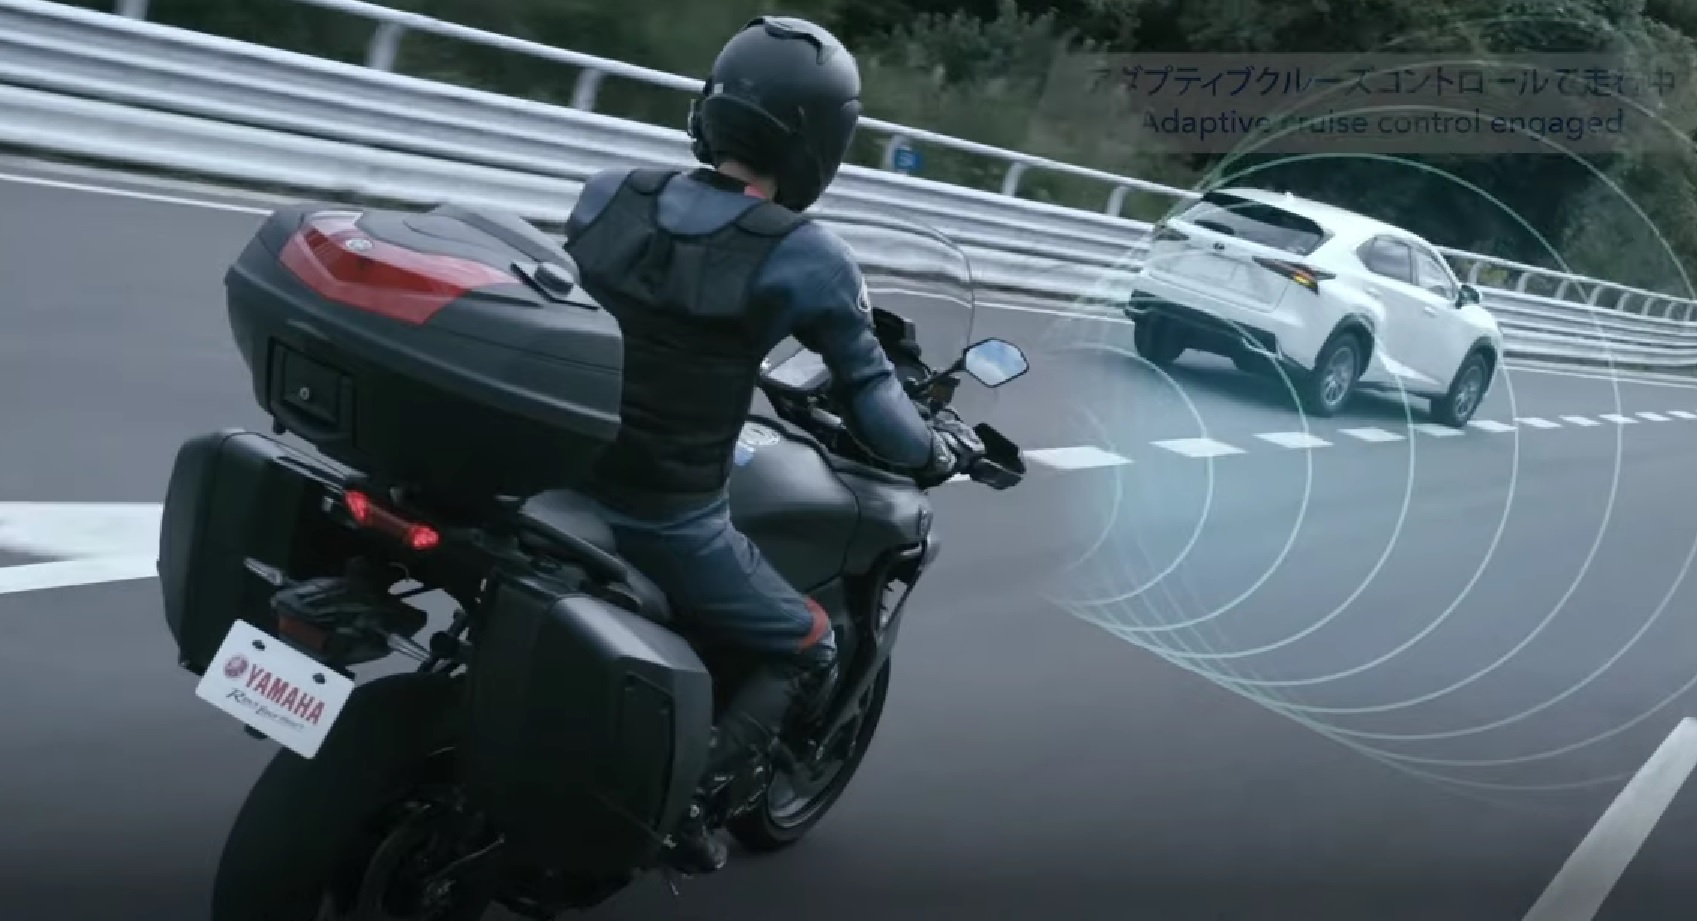 Gagasan Visi Safety Jin-Ki Kanno dan Jin-Ki Anzen Cara Baru Yamaha Meningkatkan Keselamatan Berkendara